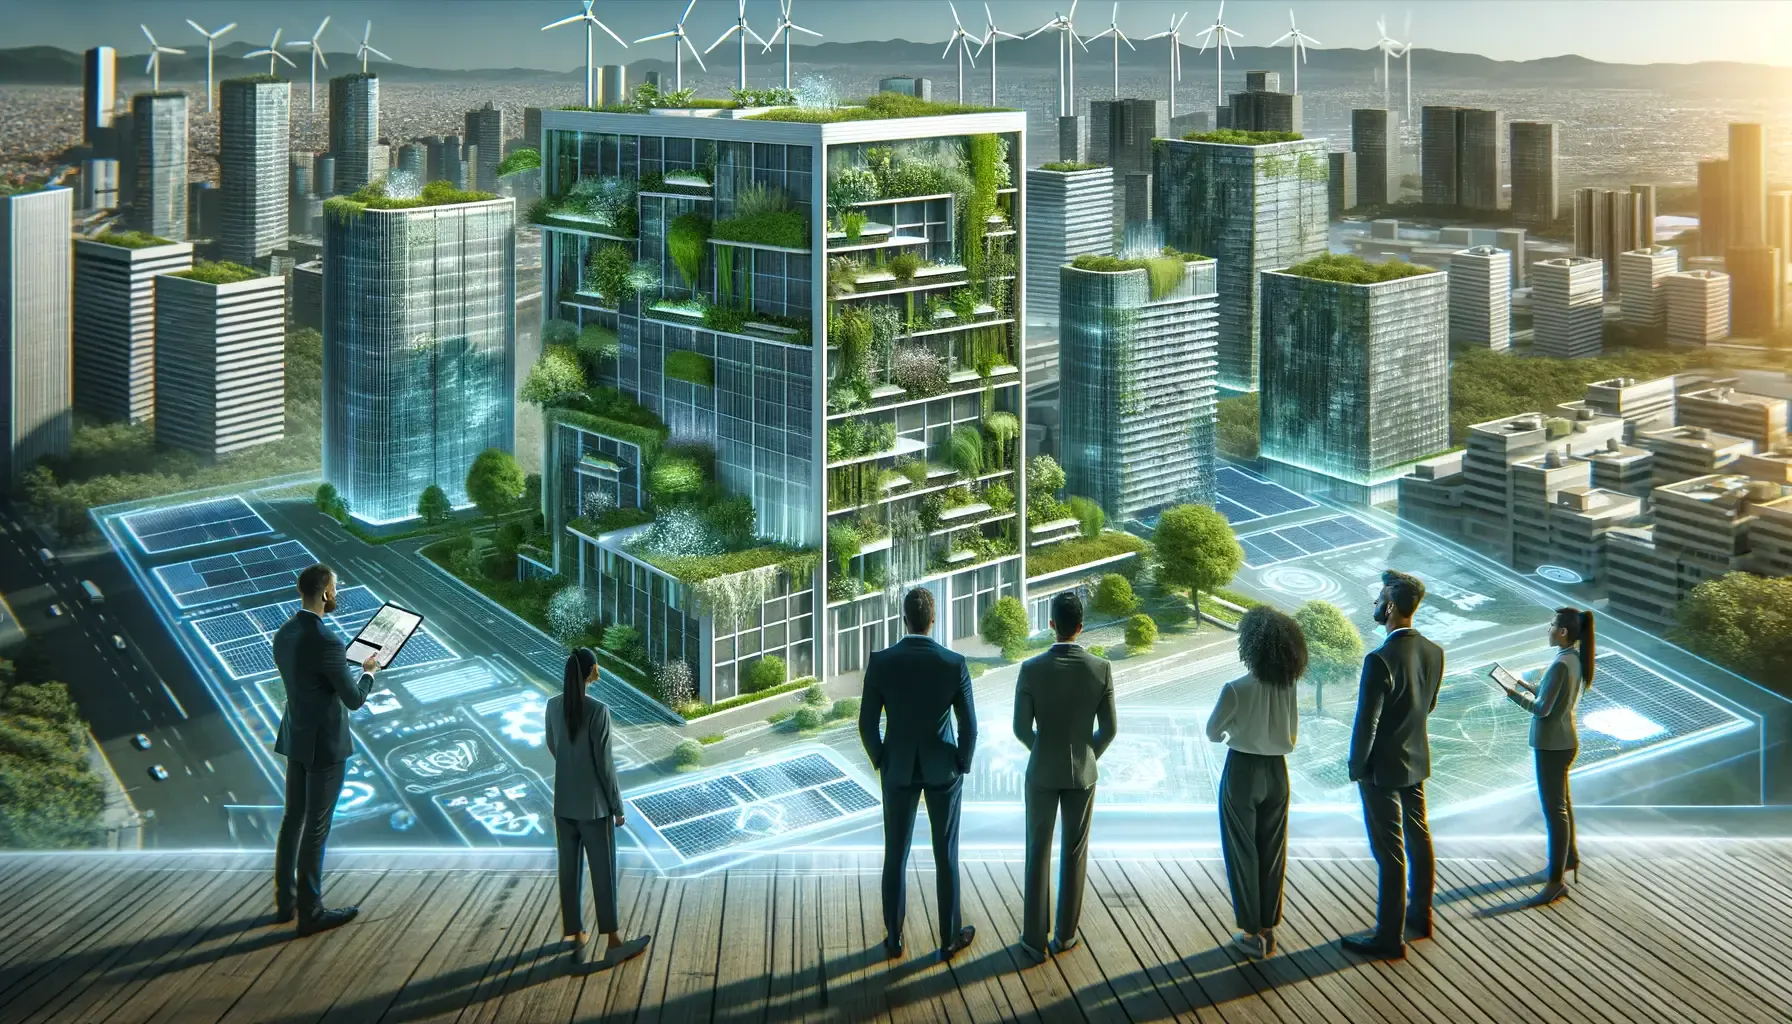 Green Building Technologies